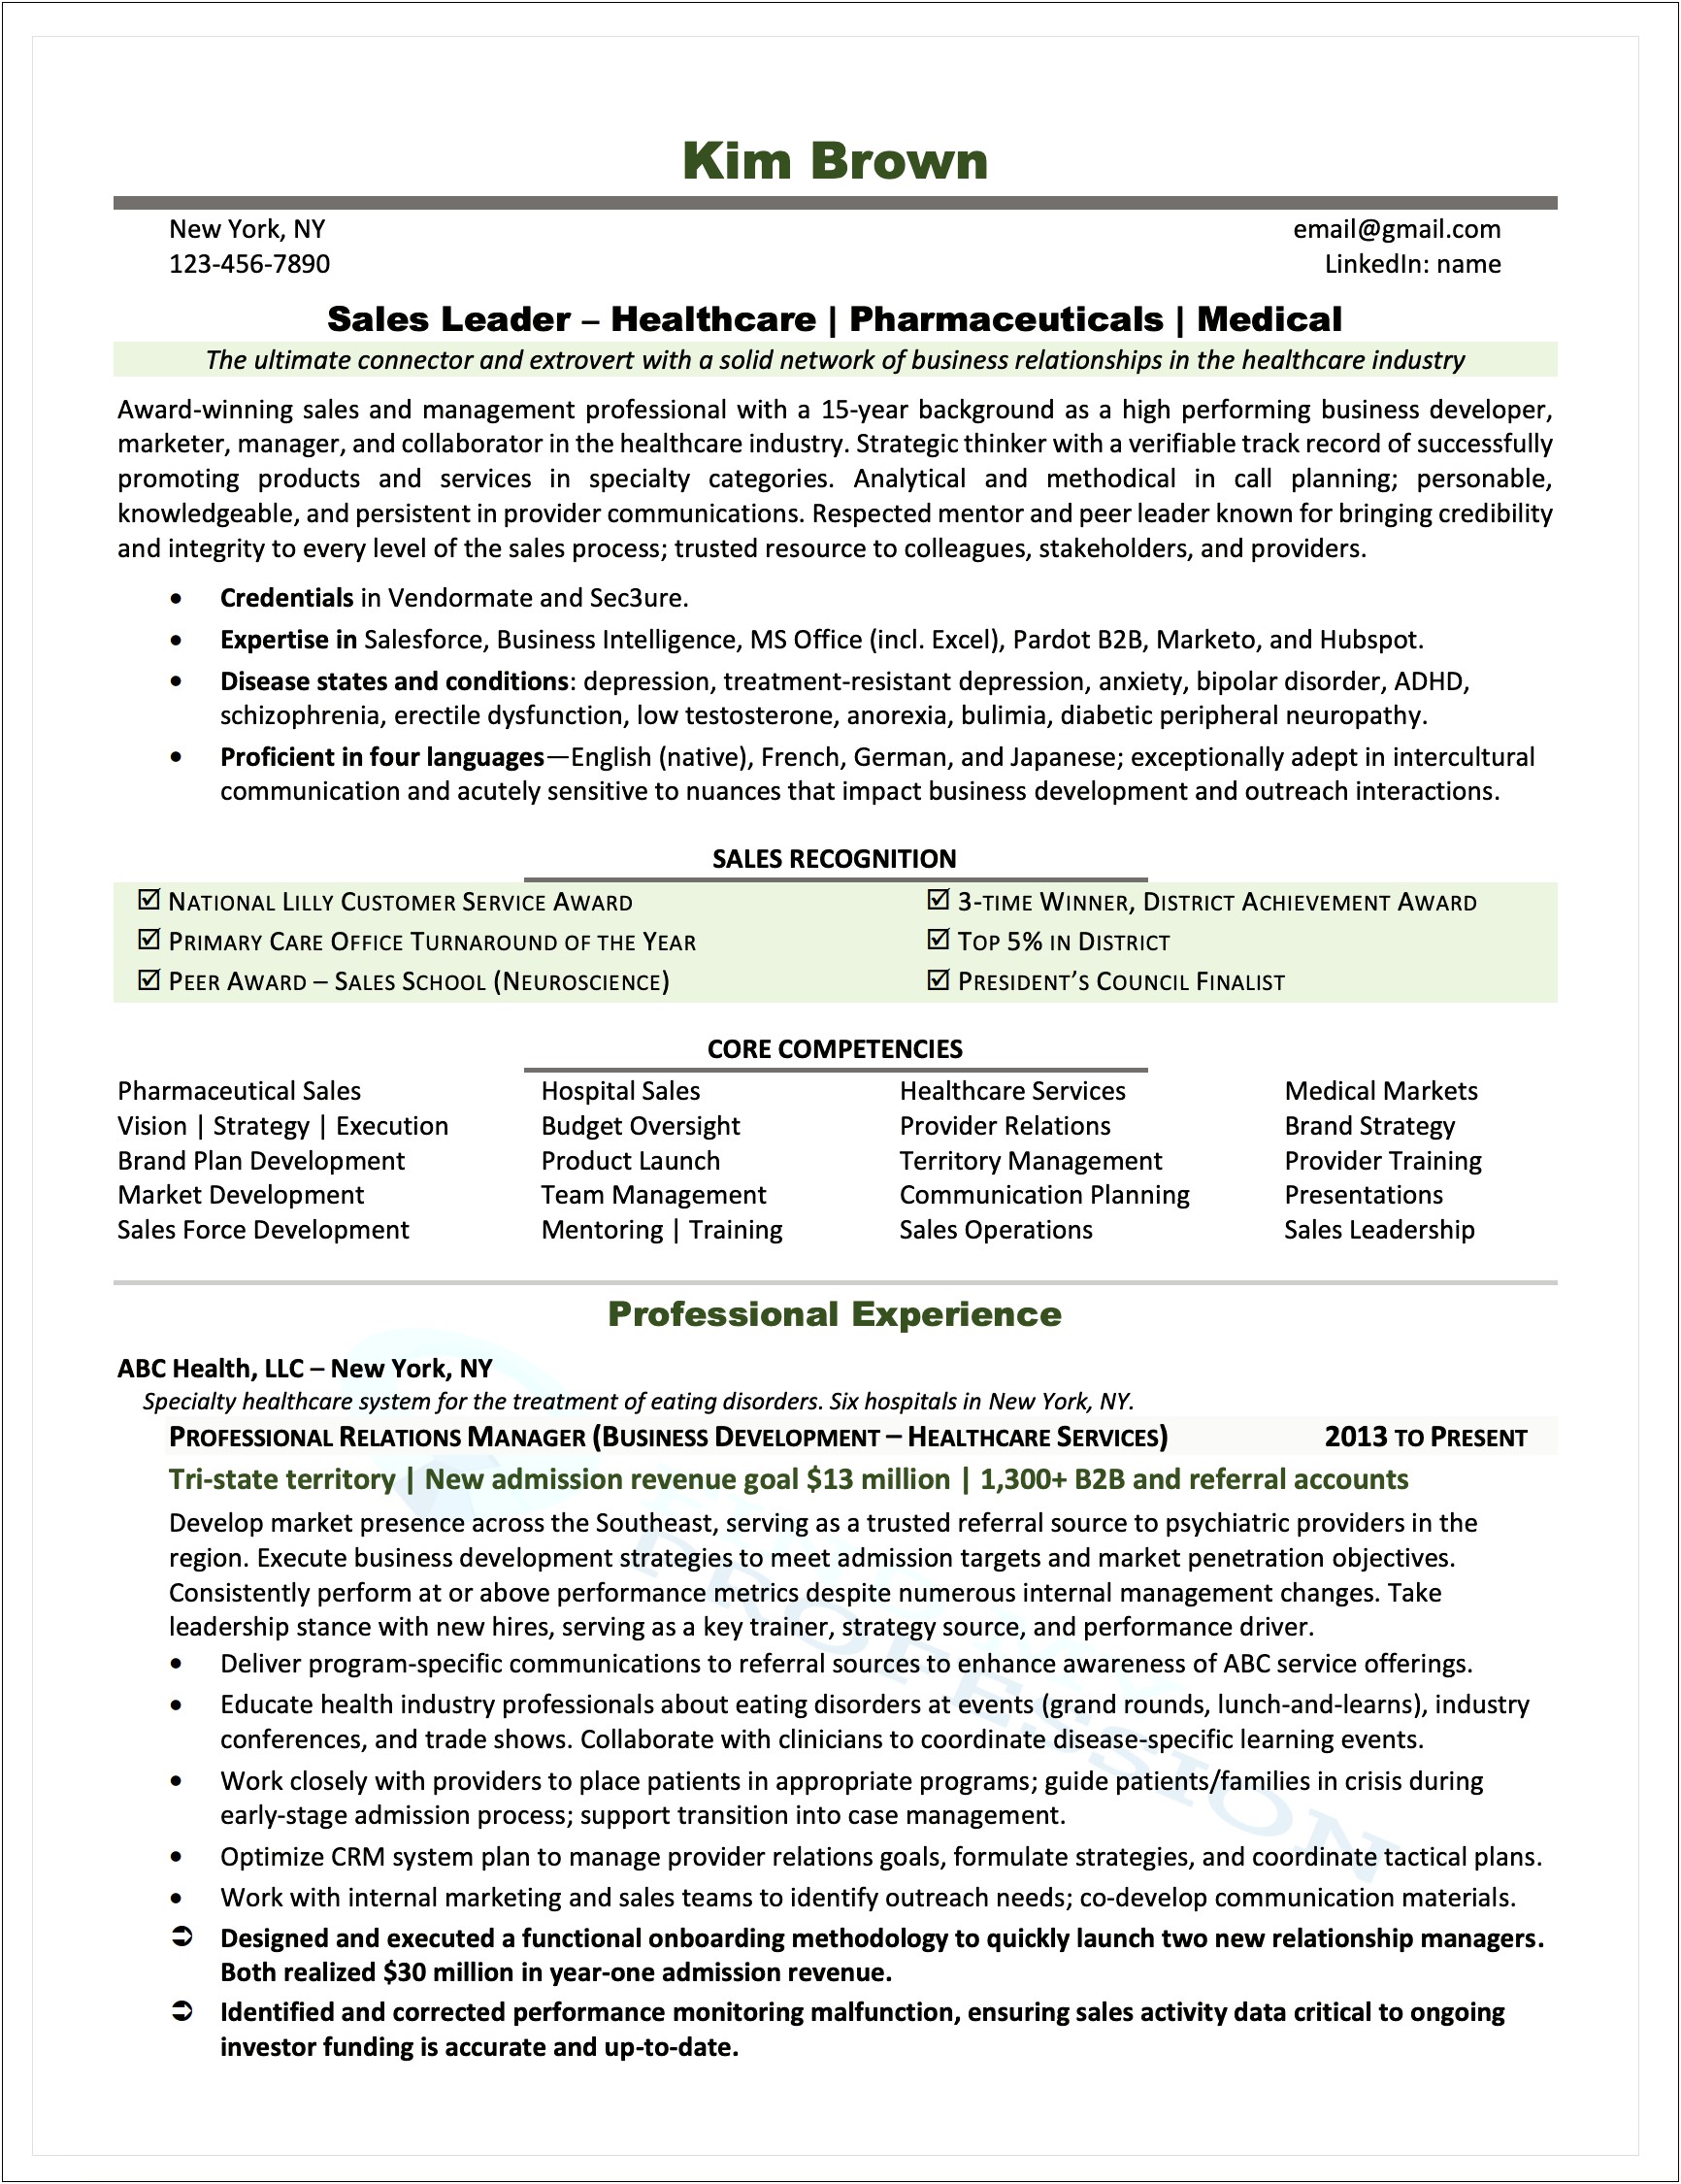 Sample Resume For Pharmaceutical Sales Entry Level